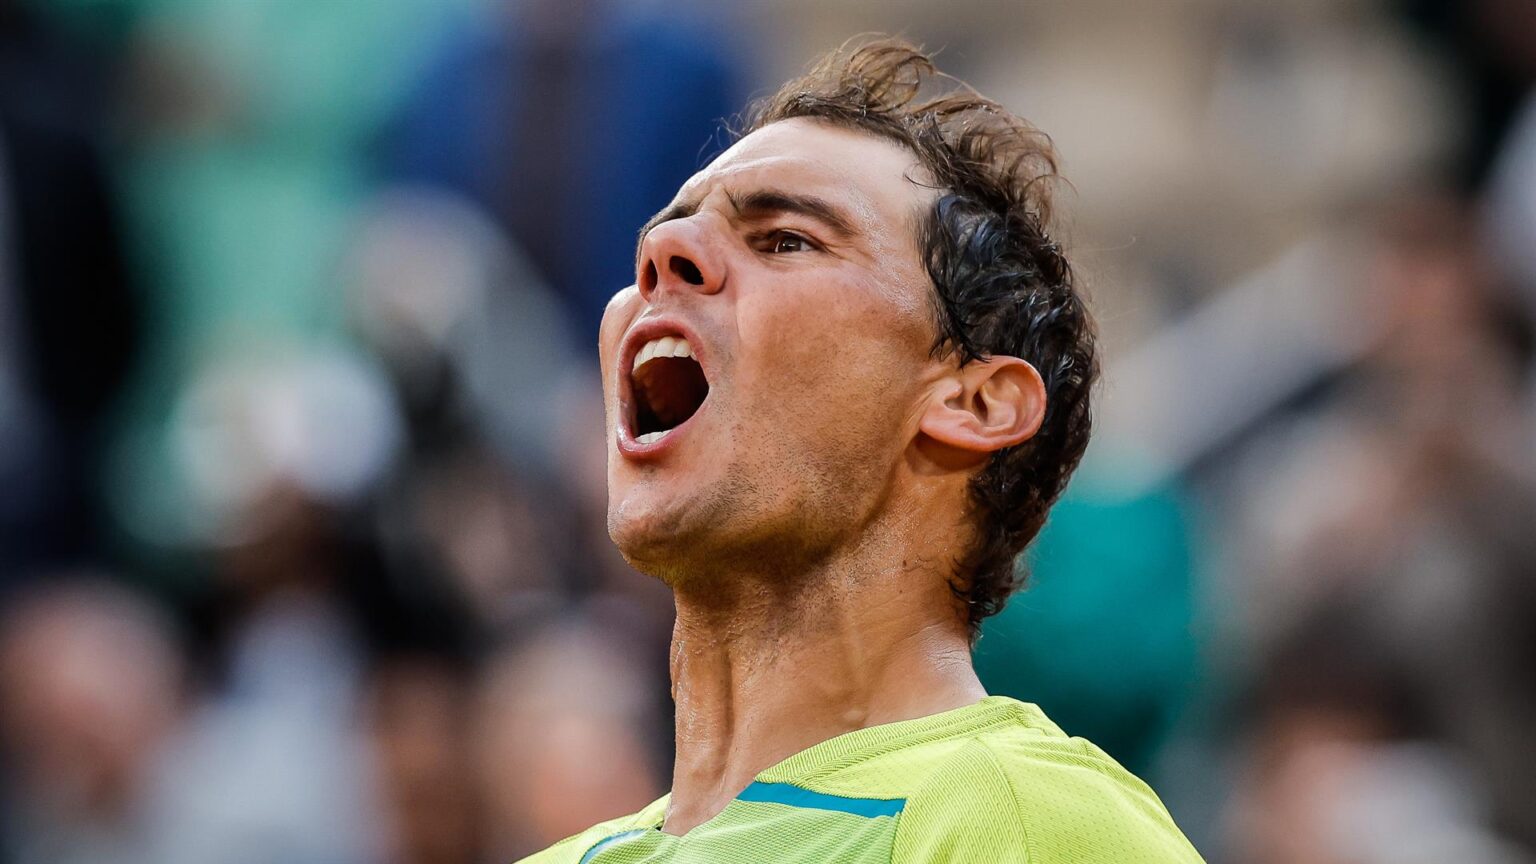 Rafa Nadal gana a Djokovic y firma otra página histórica en Roland Garros para pasar a ‘semis’